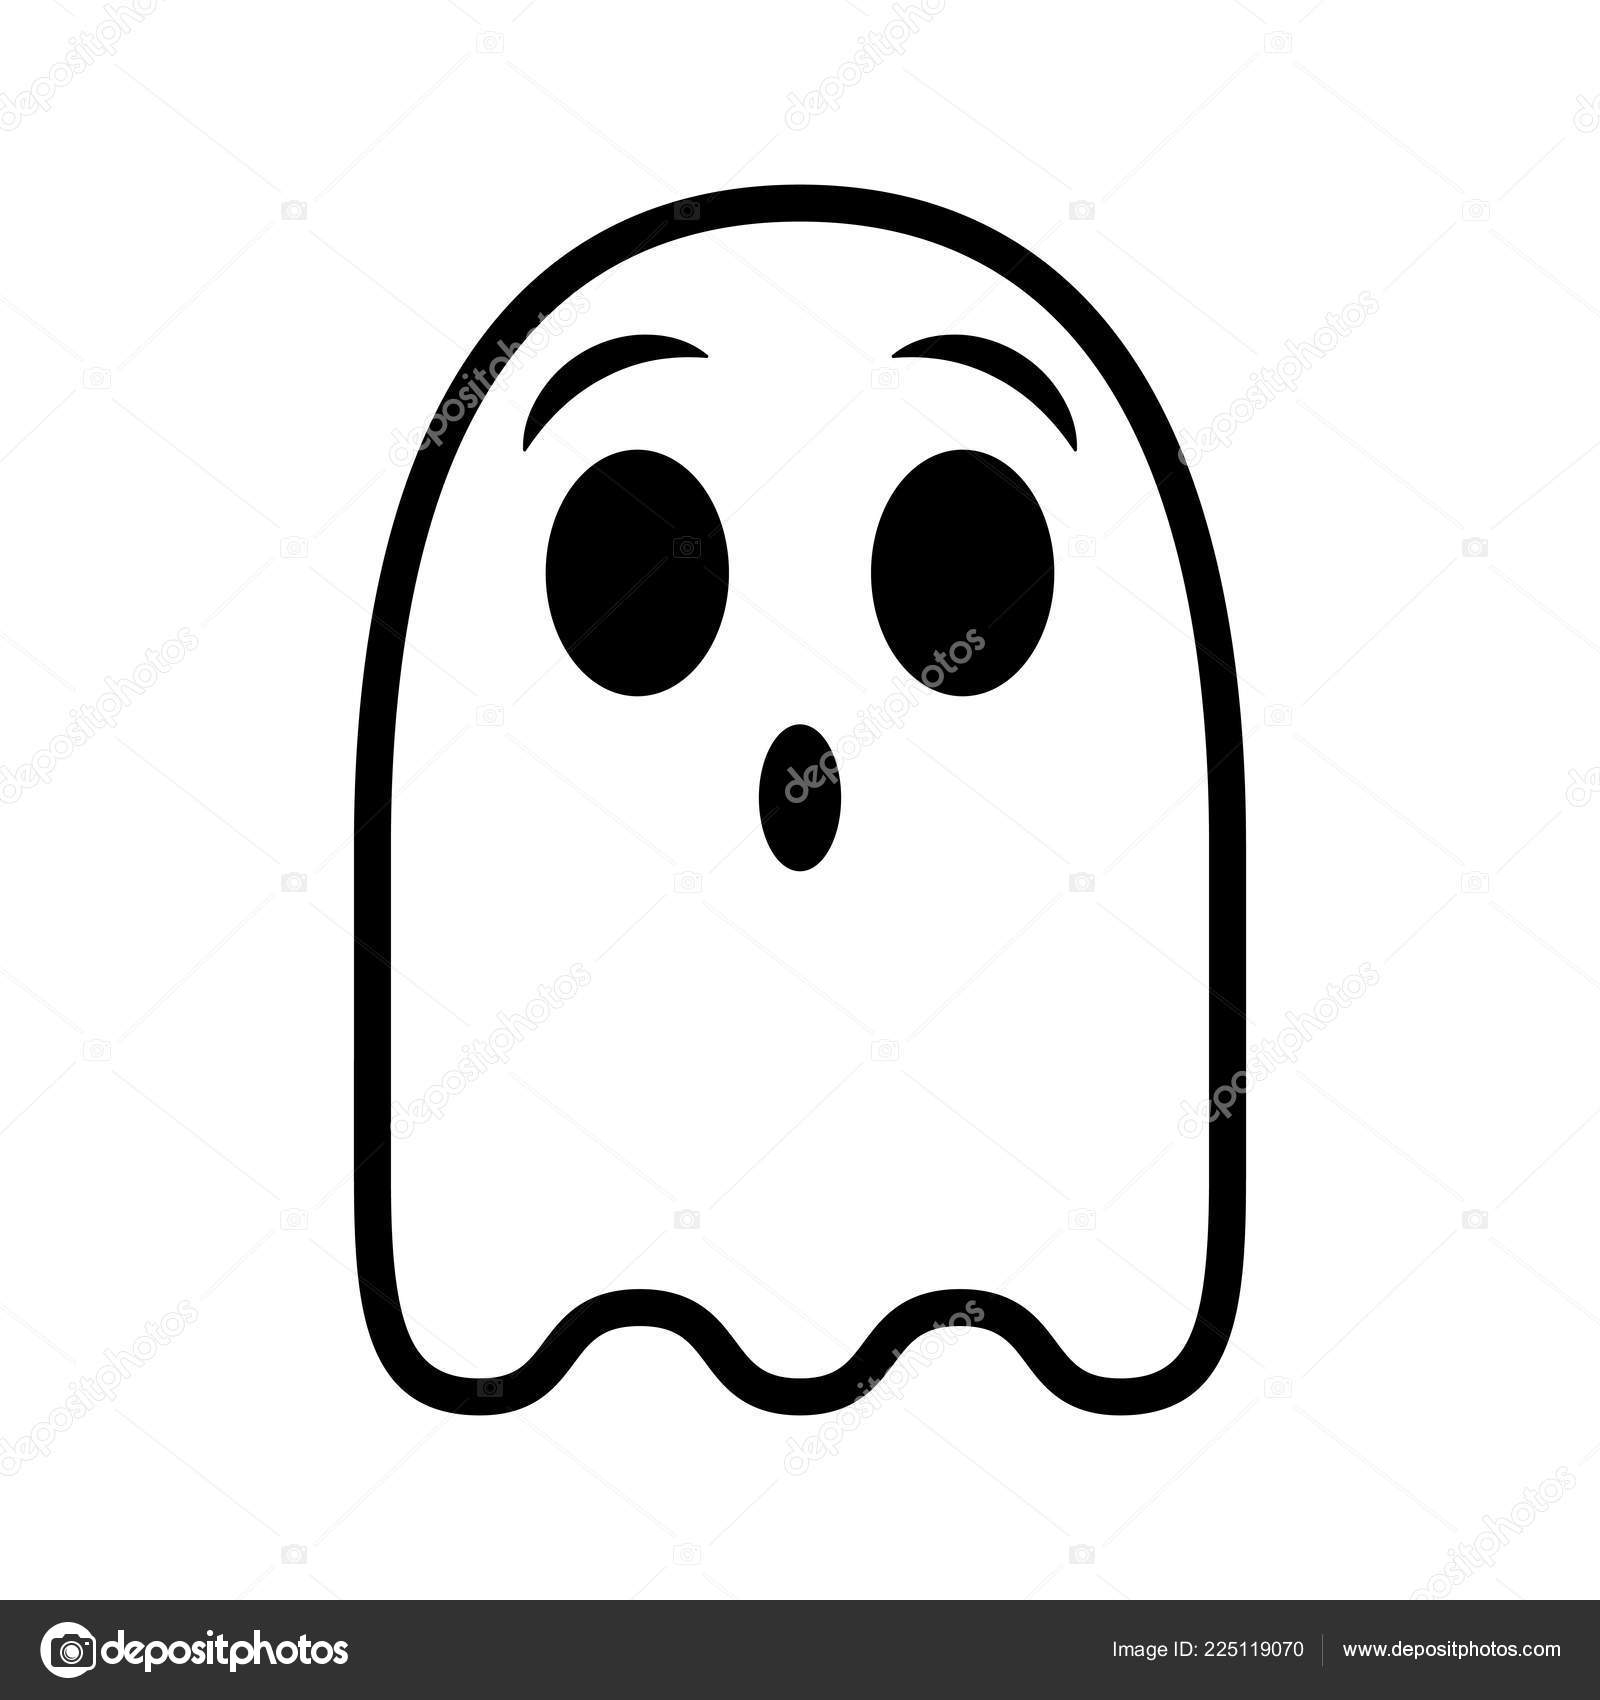 Ghost face Vector Art Stock Images | Depositphotos